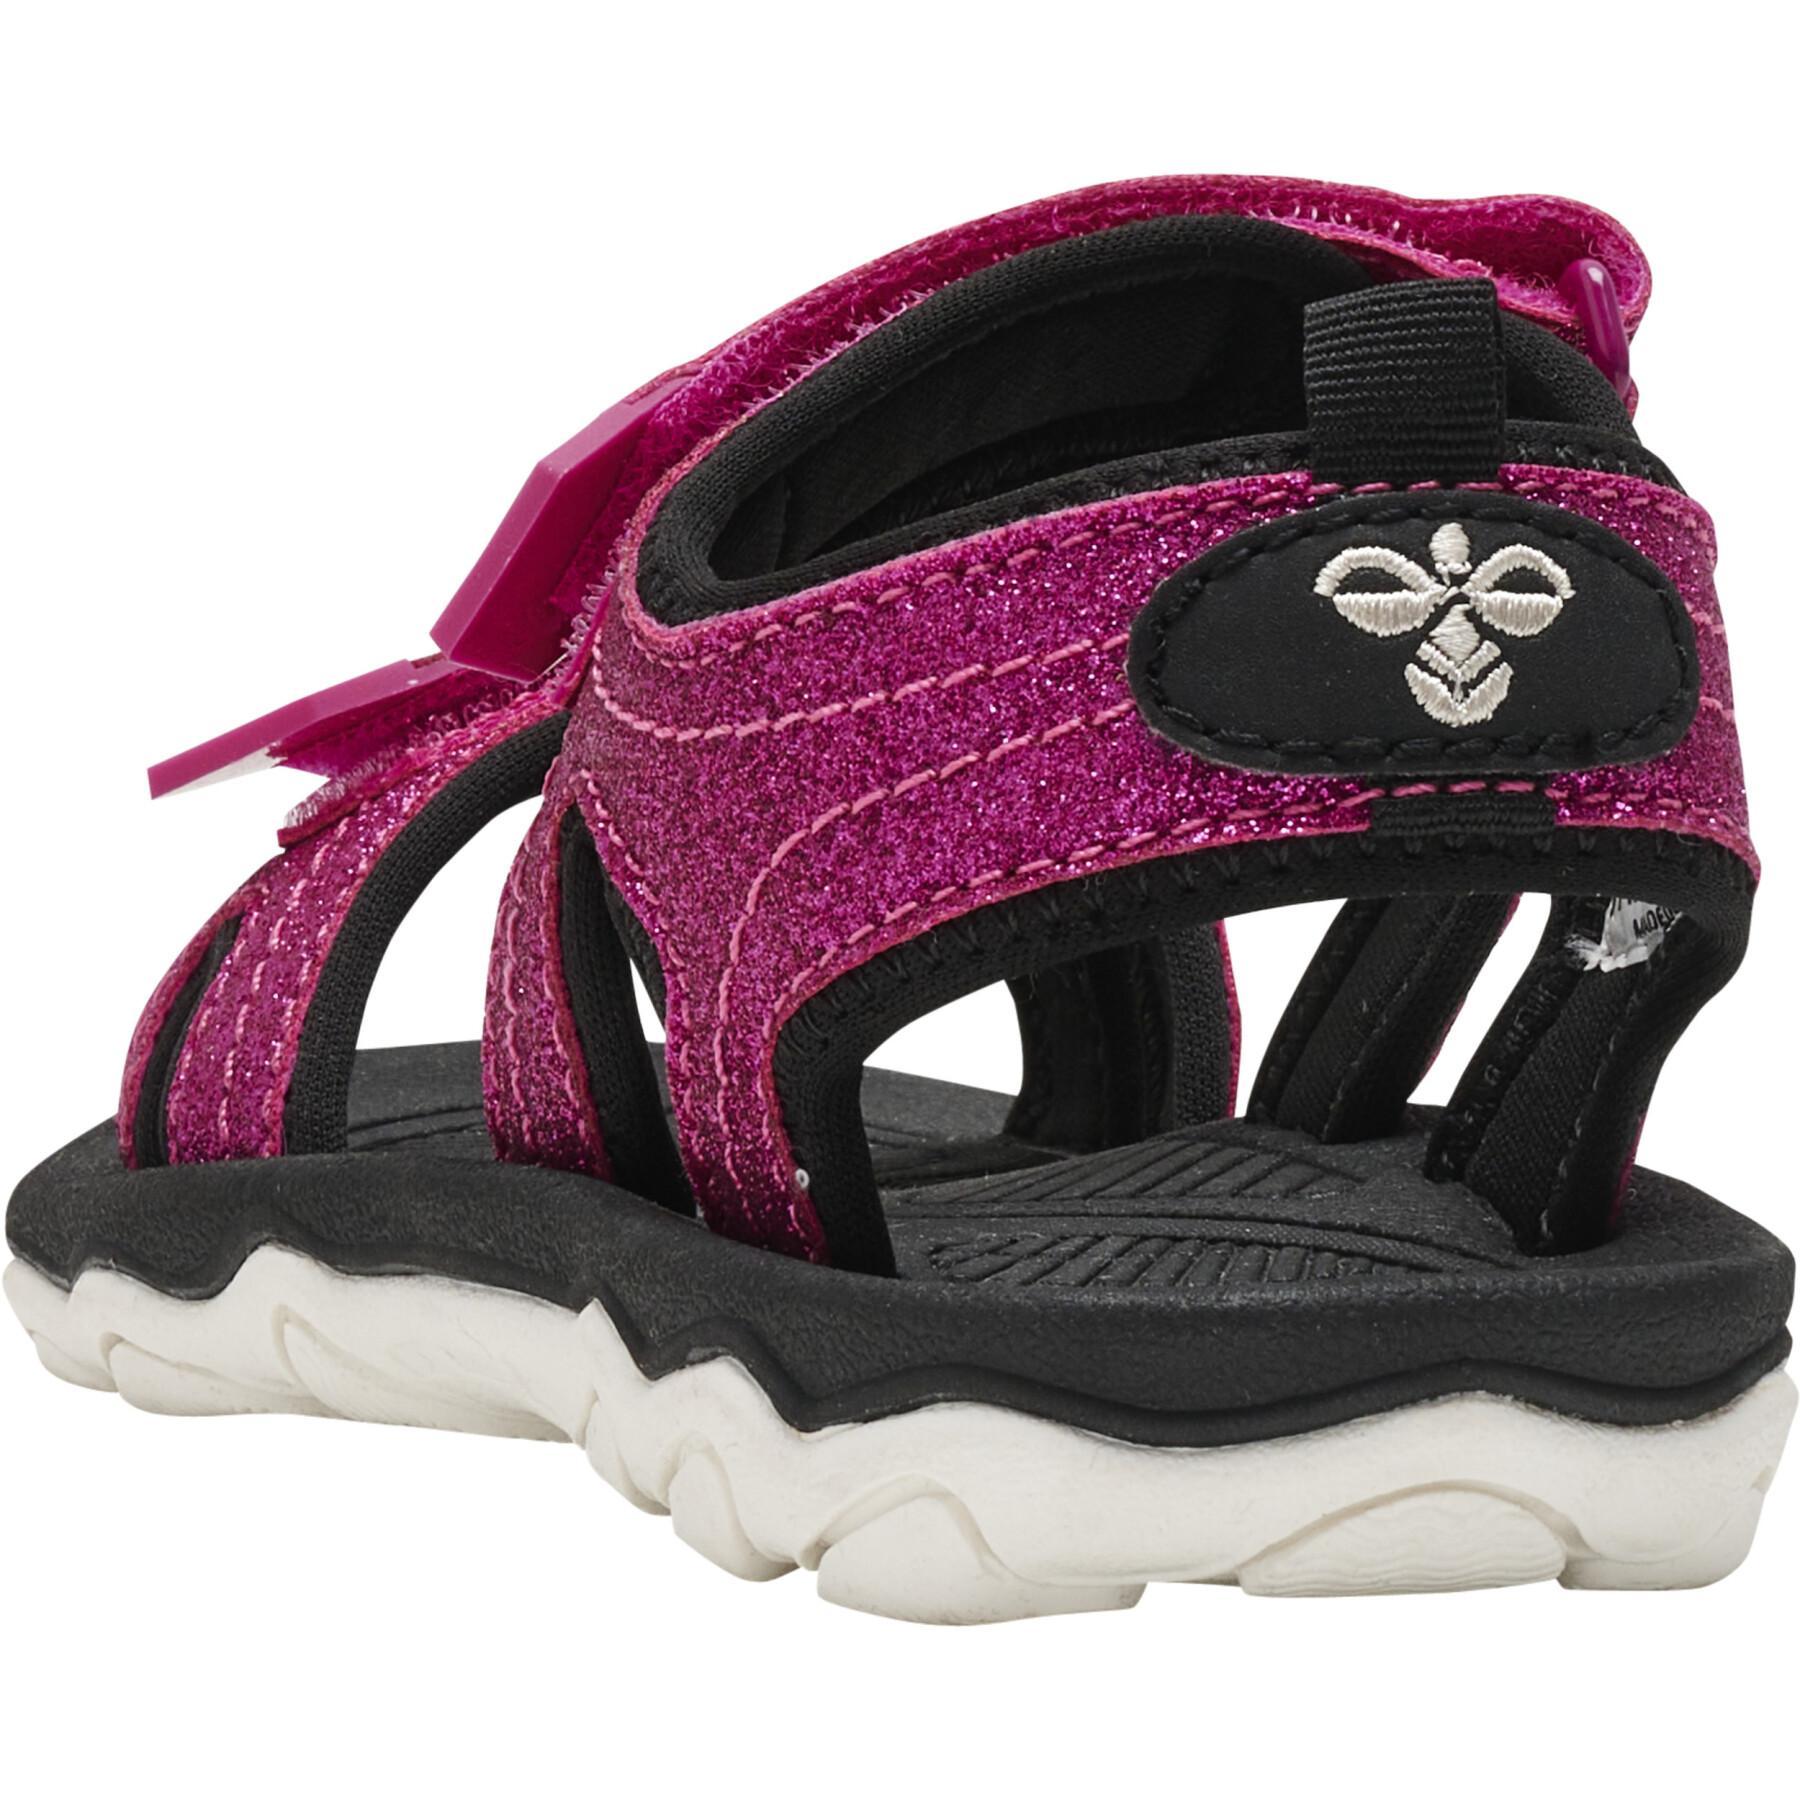 Sequined sandals girl Hummel Sport